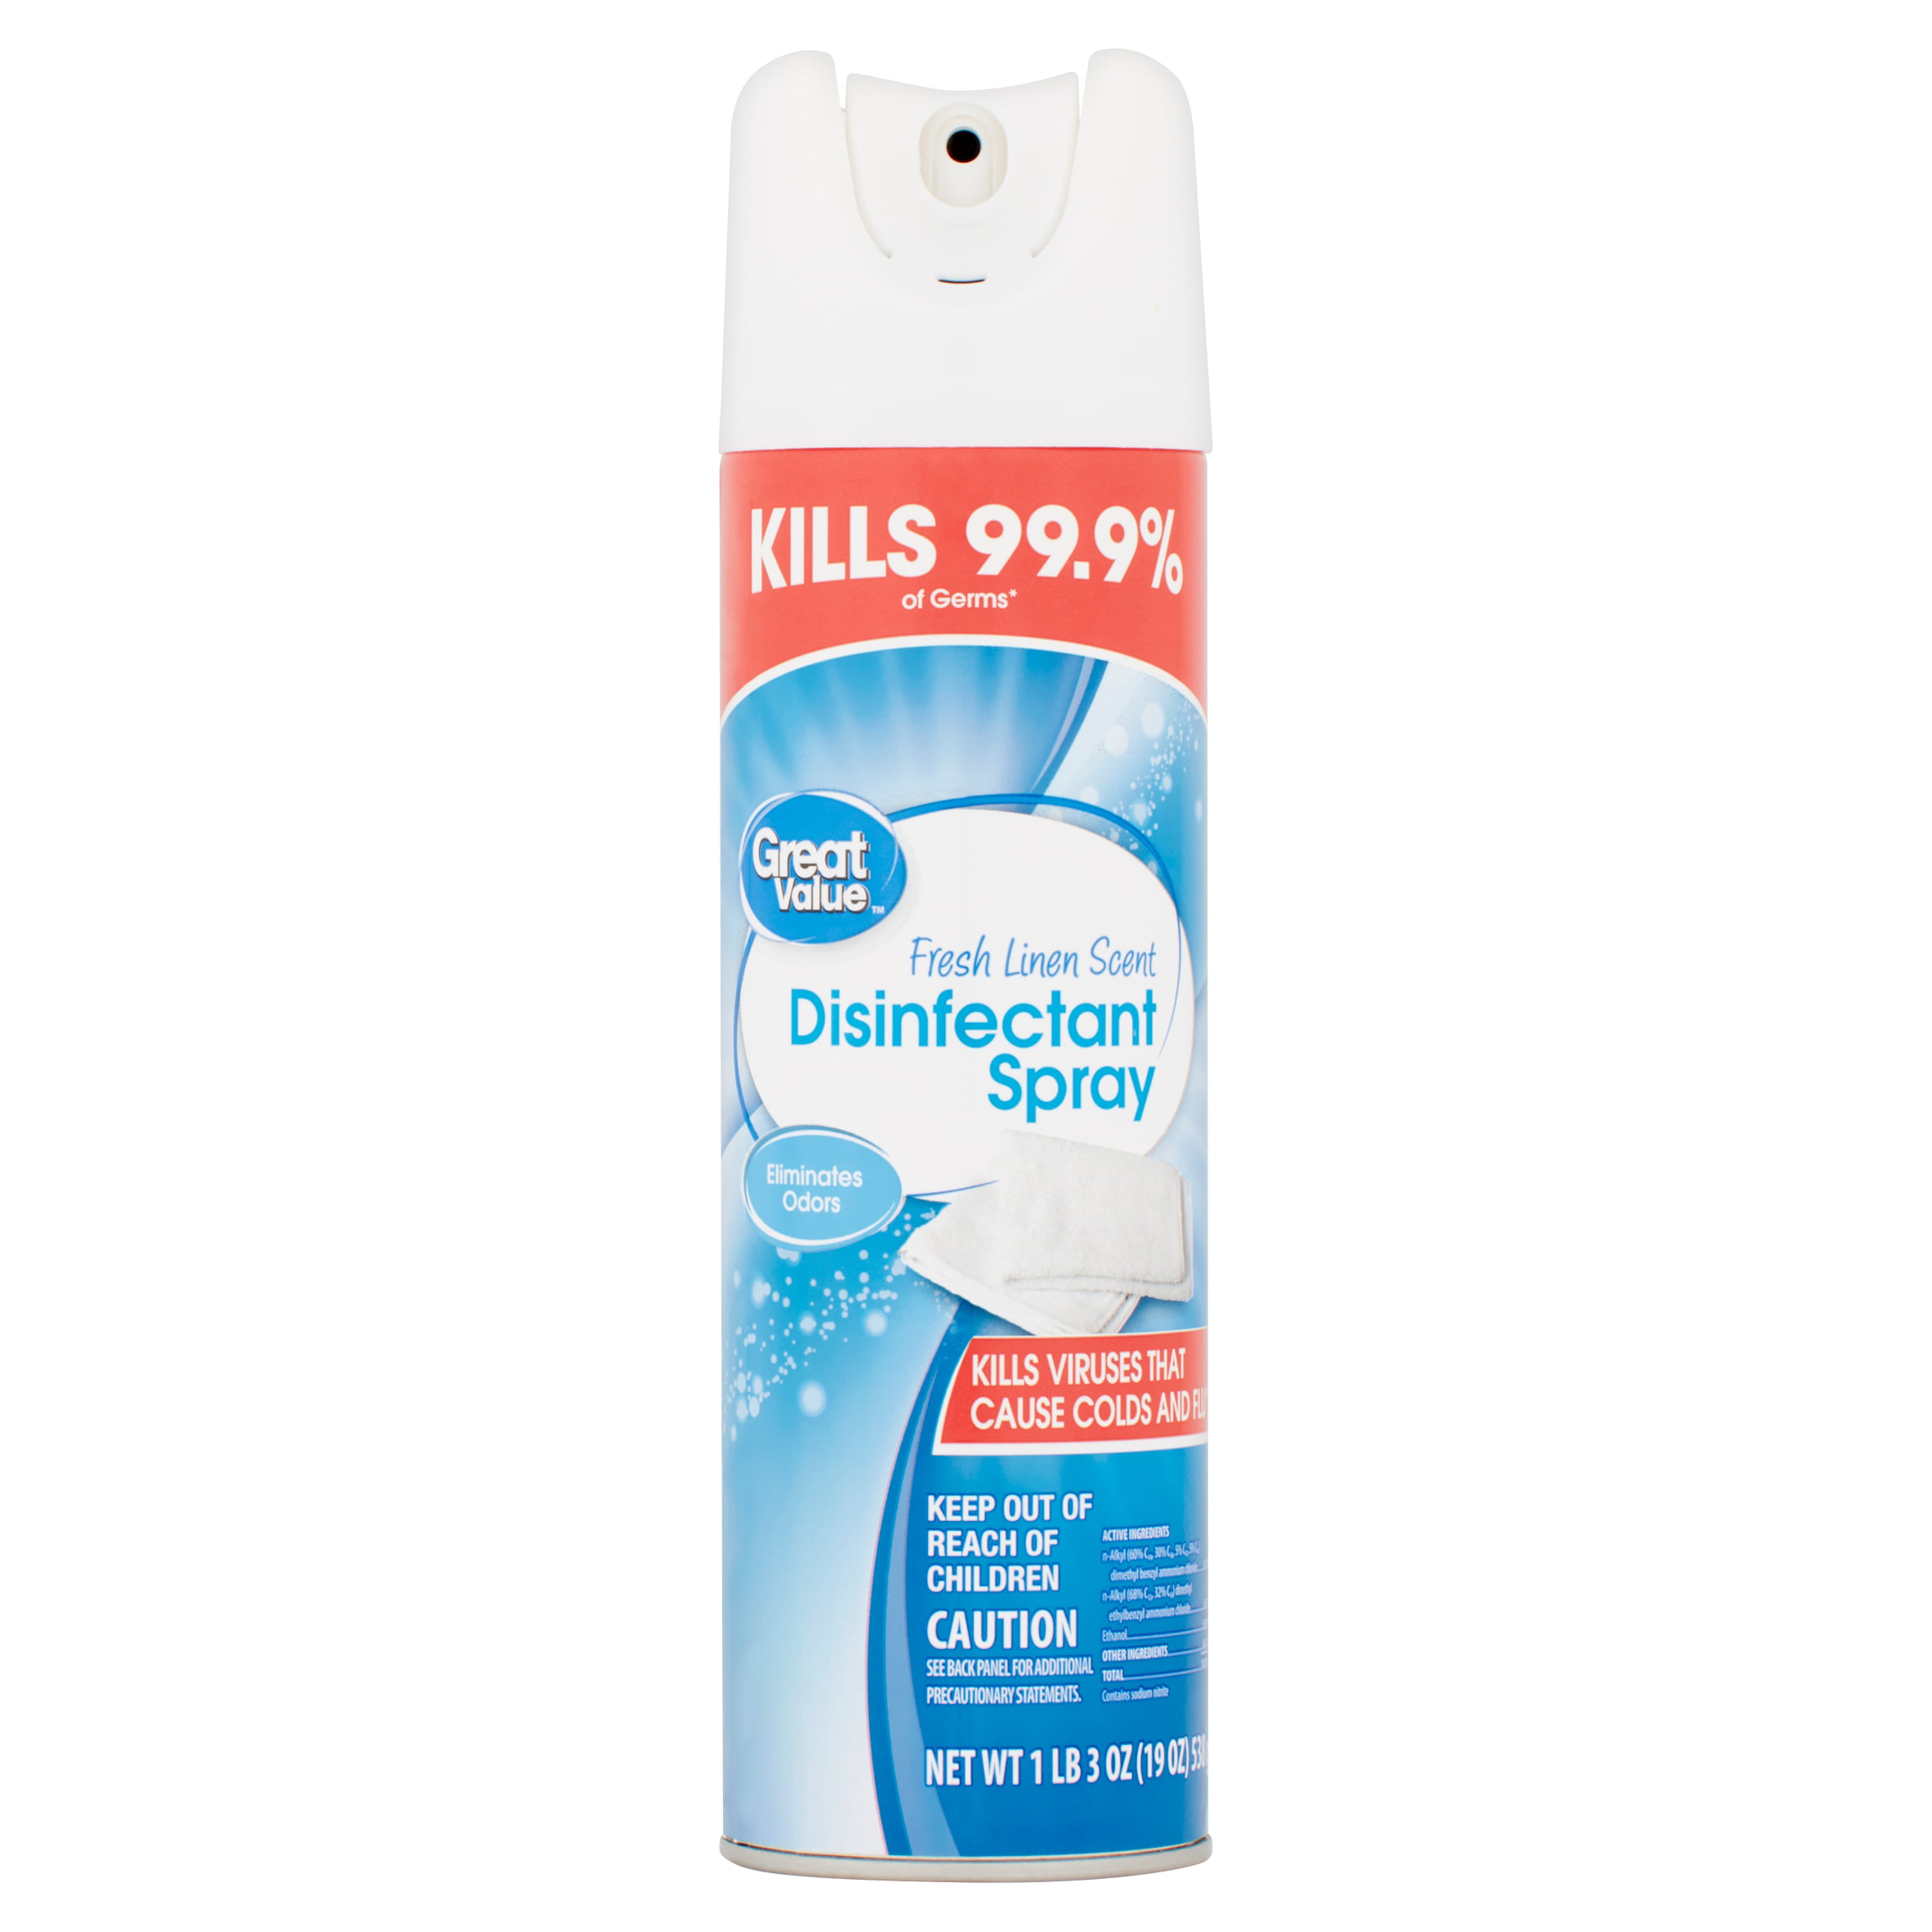 Great Value Fresh Linen Scent Disinfectant Spray, 1 lb 3 oz